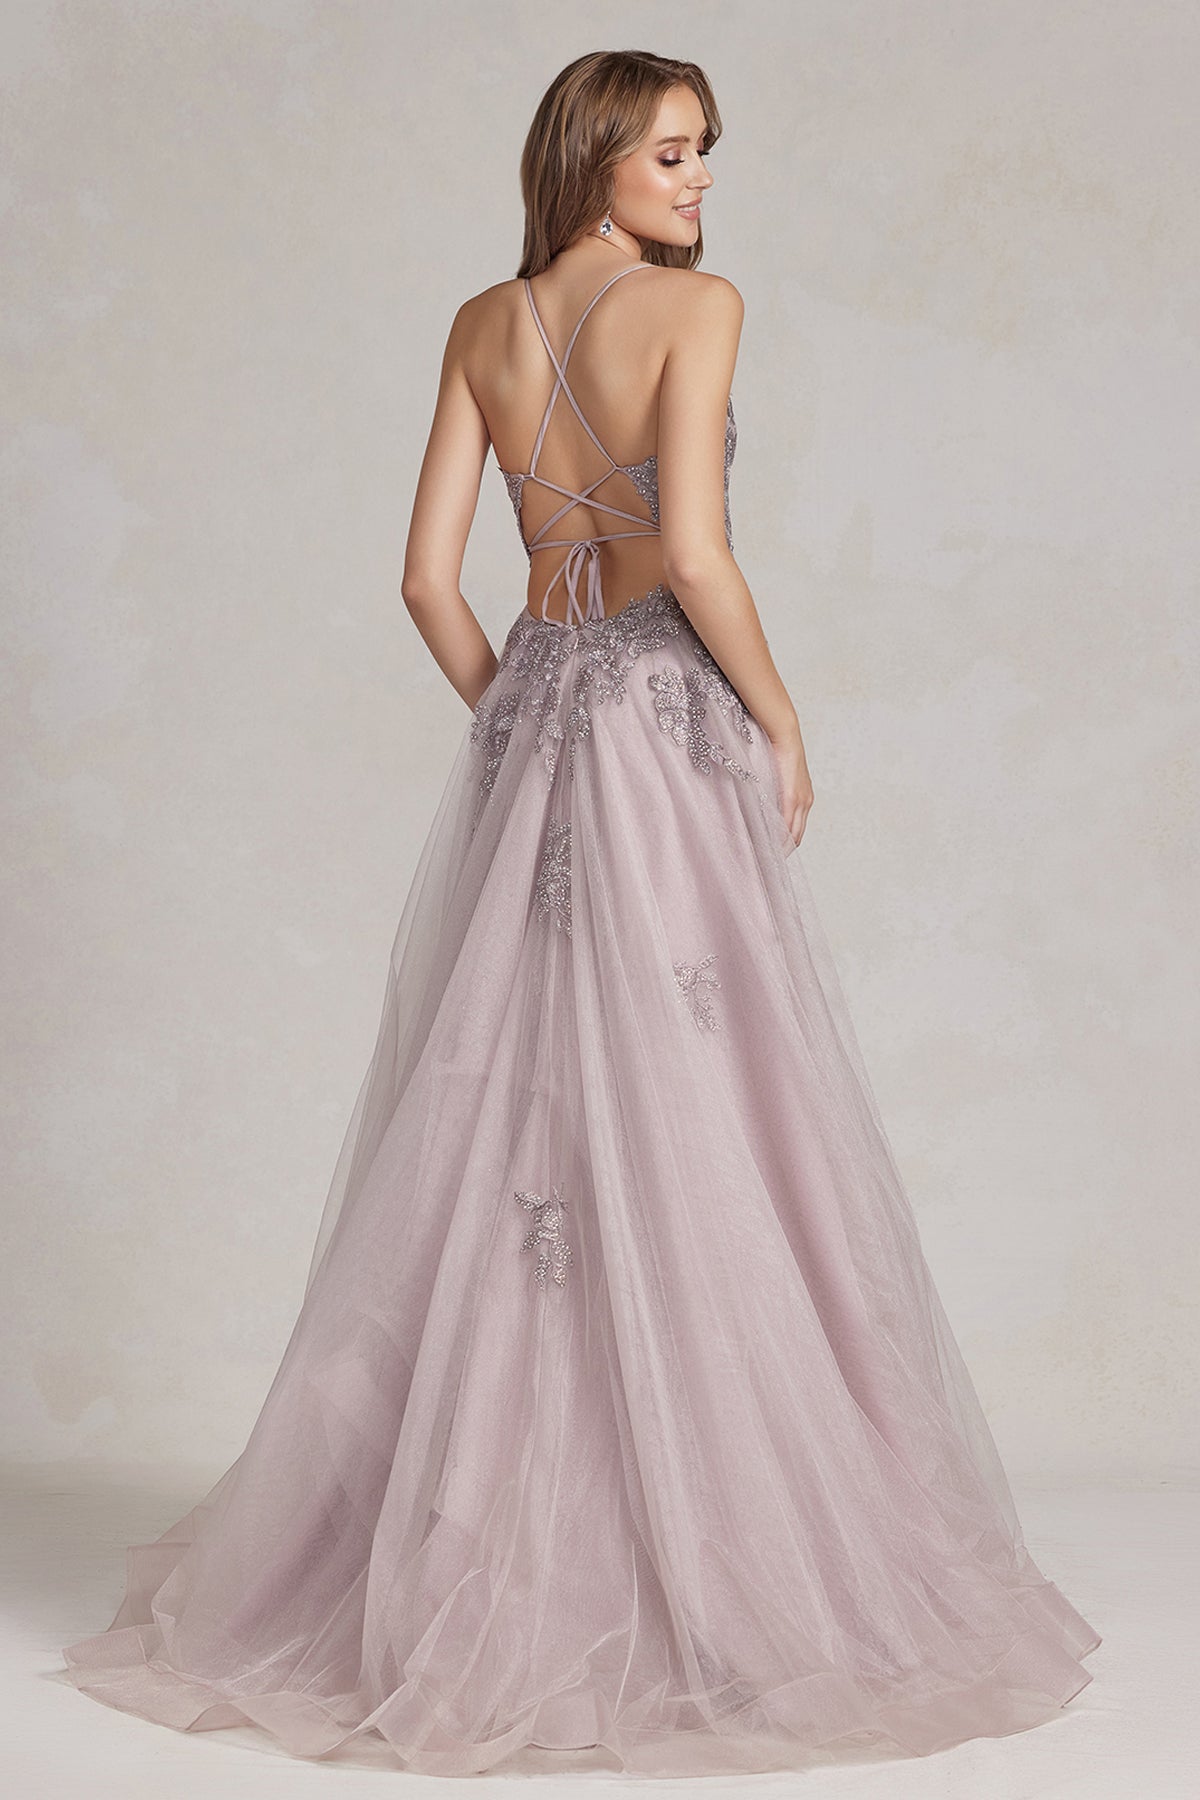 Shimmery Strap Back A-Line Dress With Side Slit